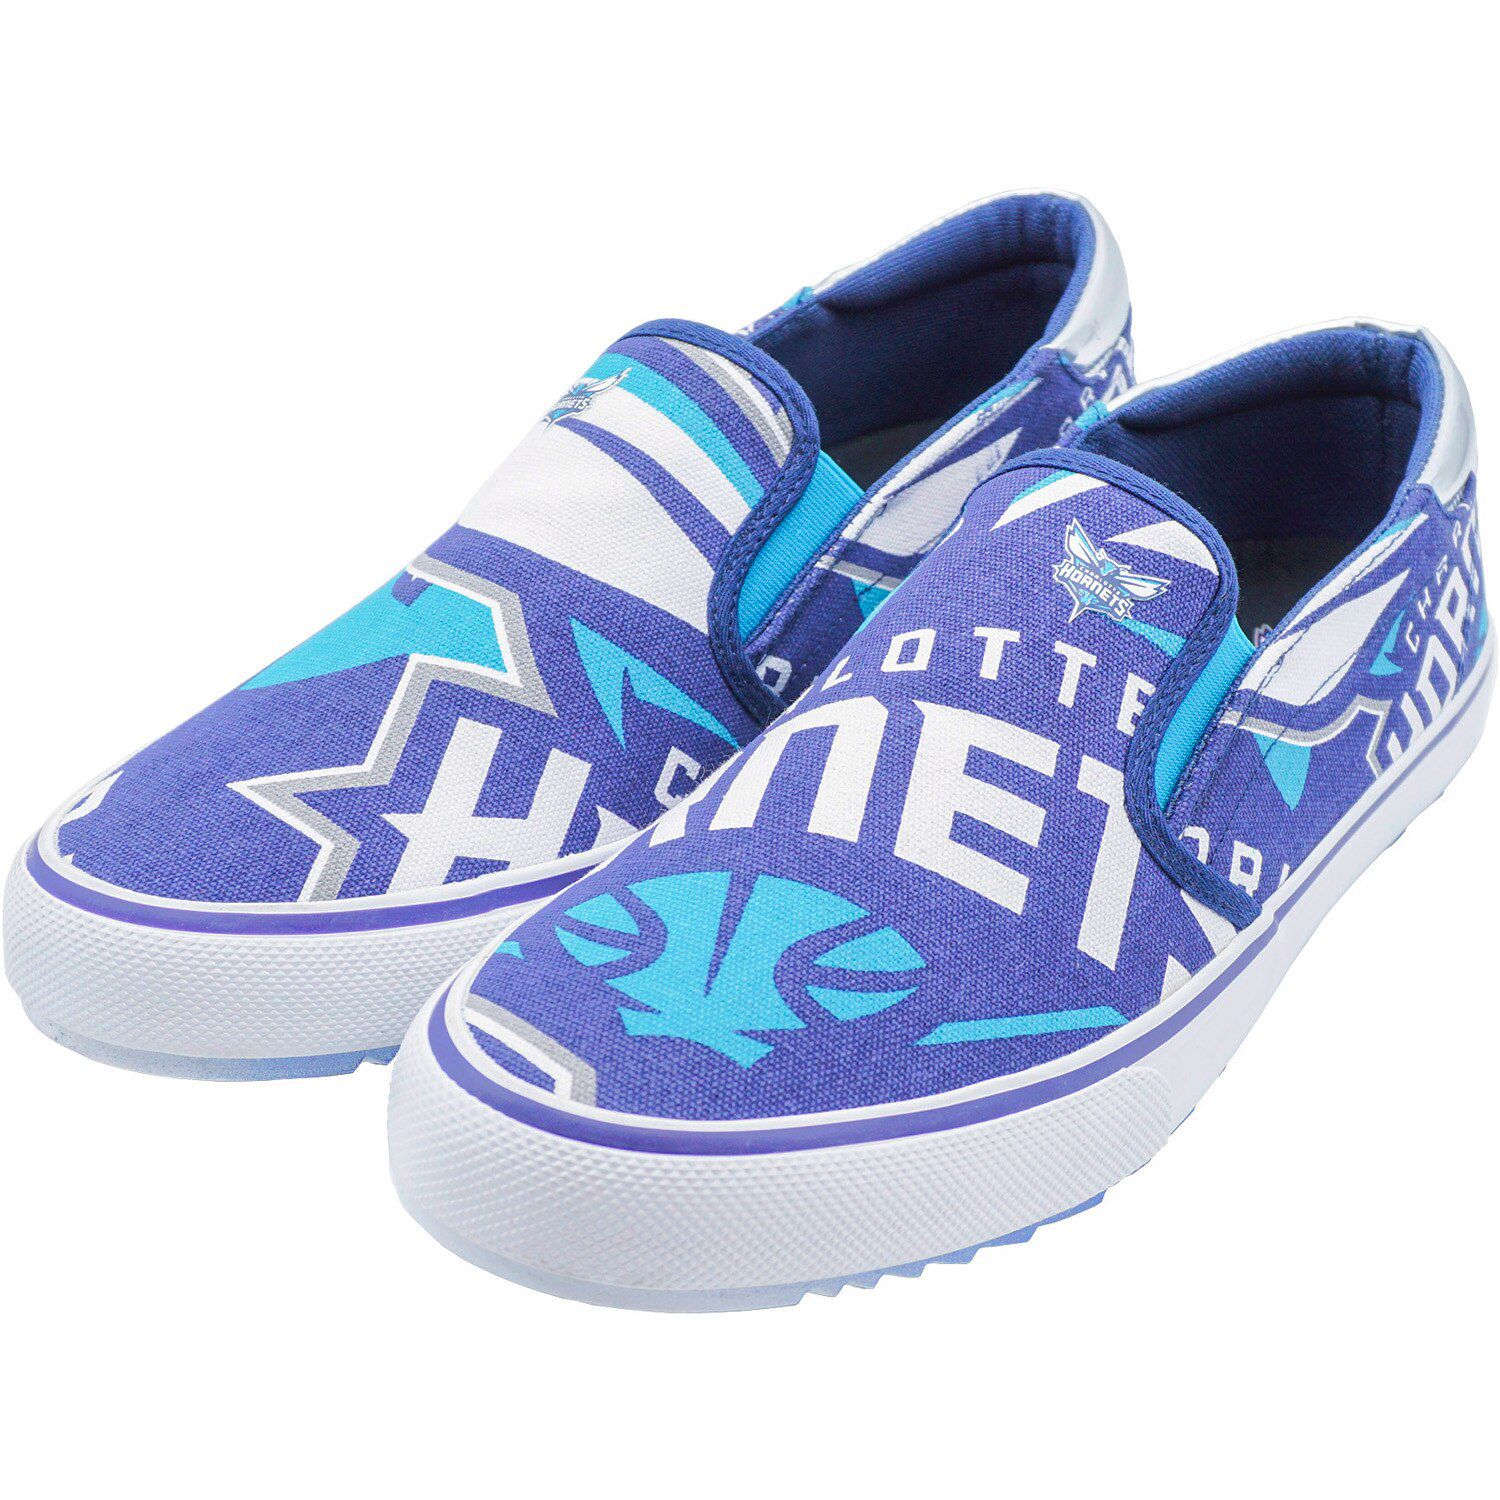 Teal Charlotte Hornets Slip-On Canvas Shoes